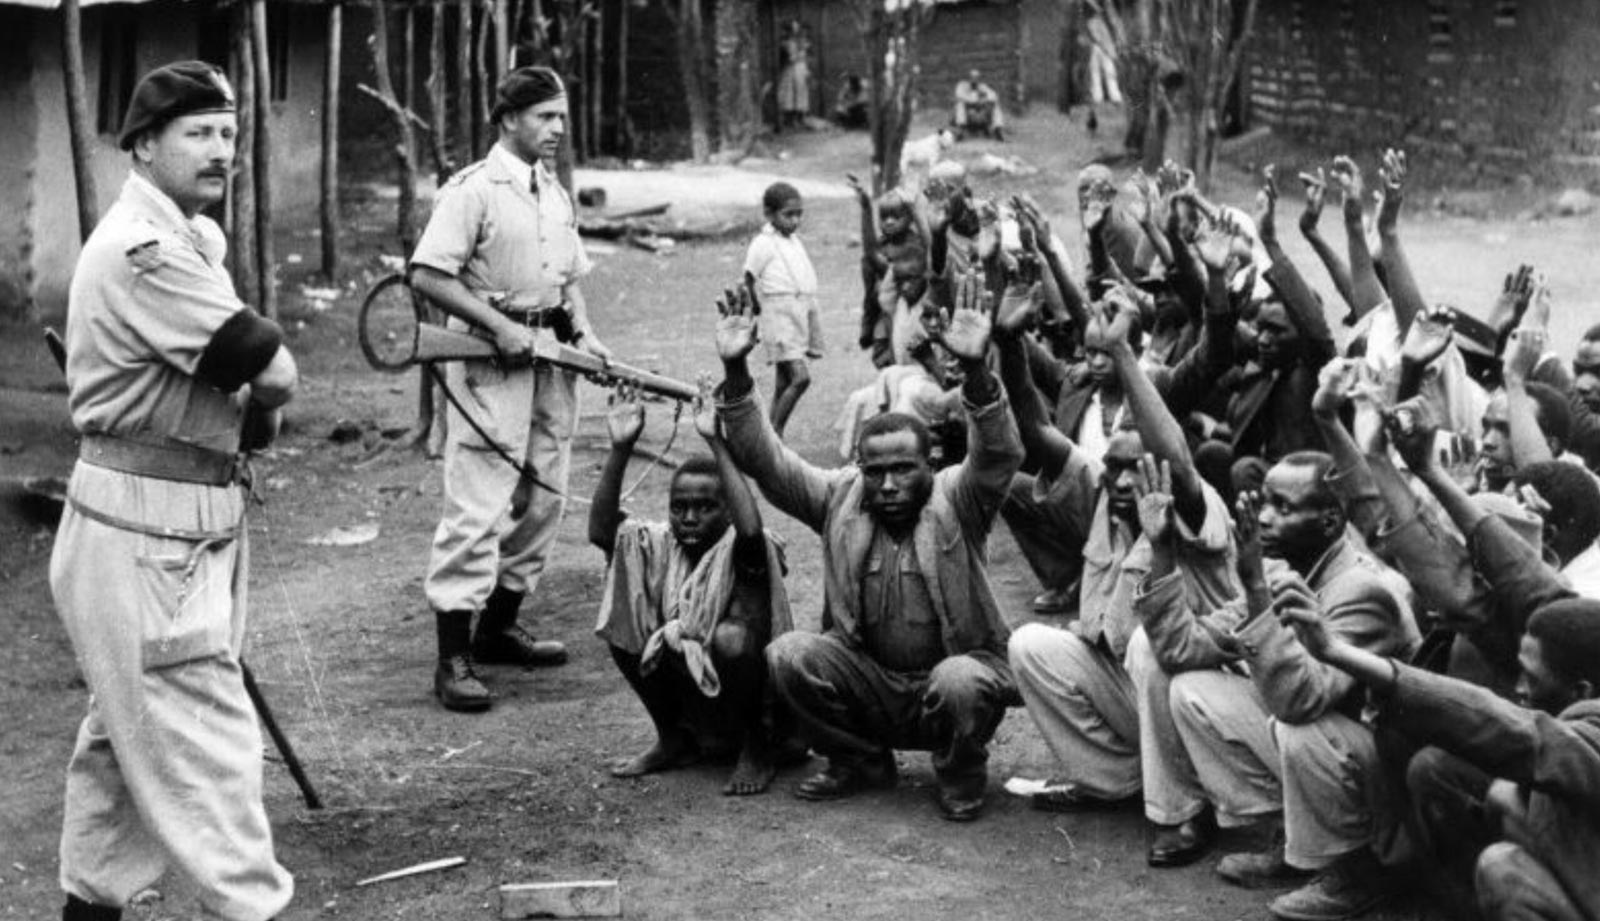 British police guarding Kikuyu participants suspected of involvement in the Mau Mau uprising, Kenya, 1953.